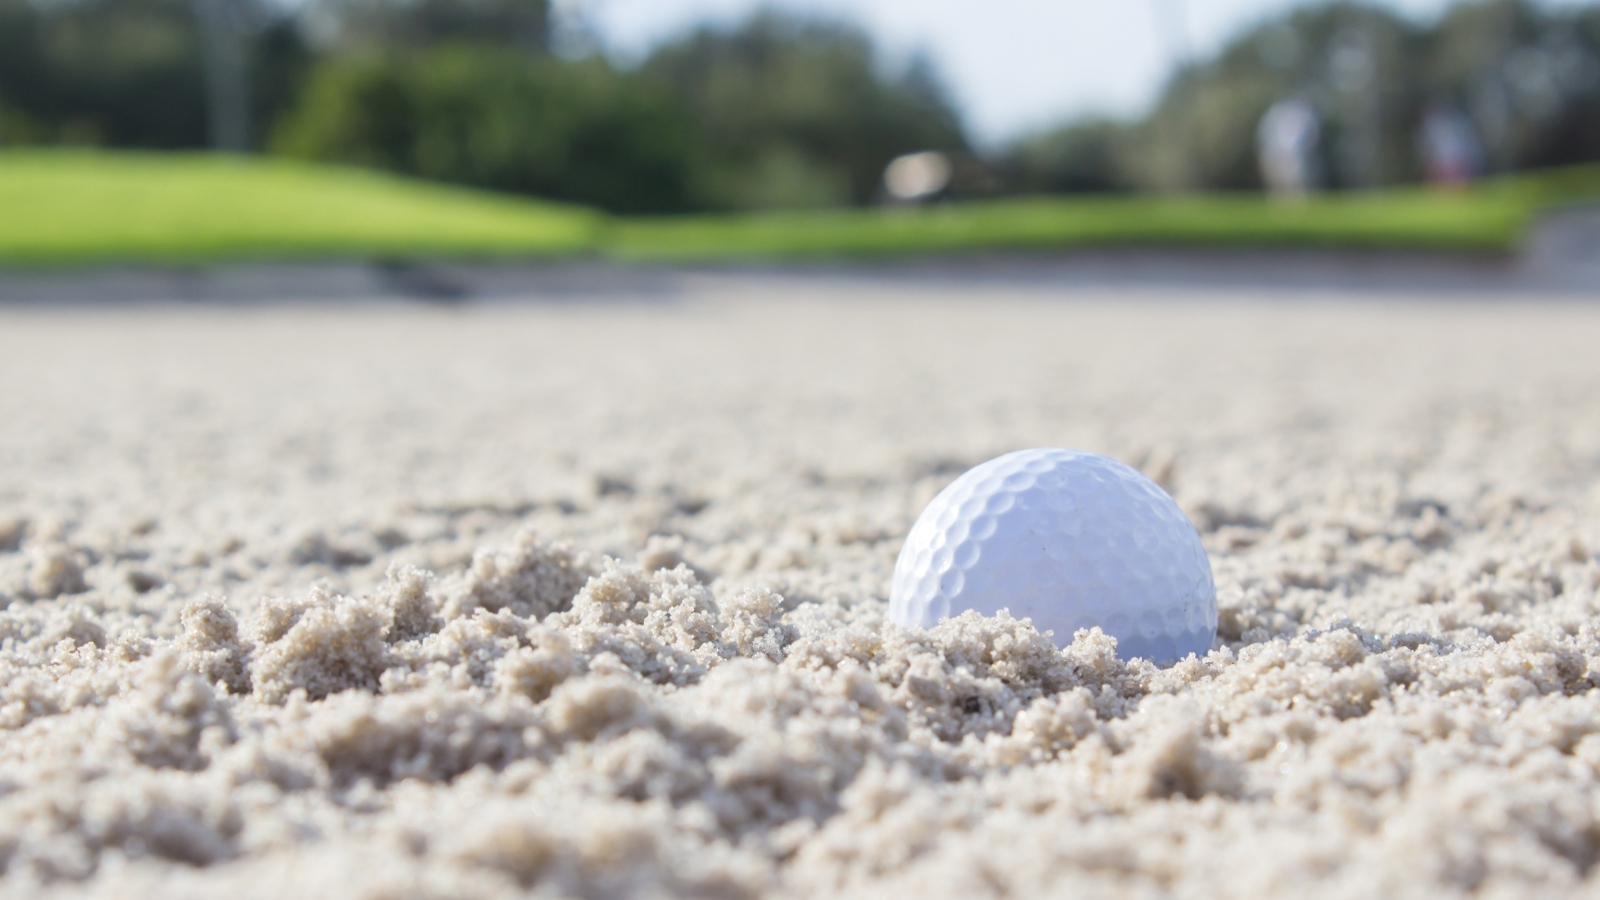 golf ball in a sand bunker